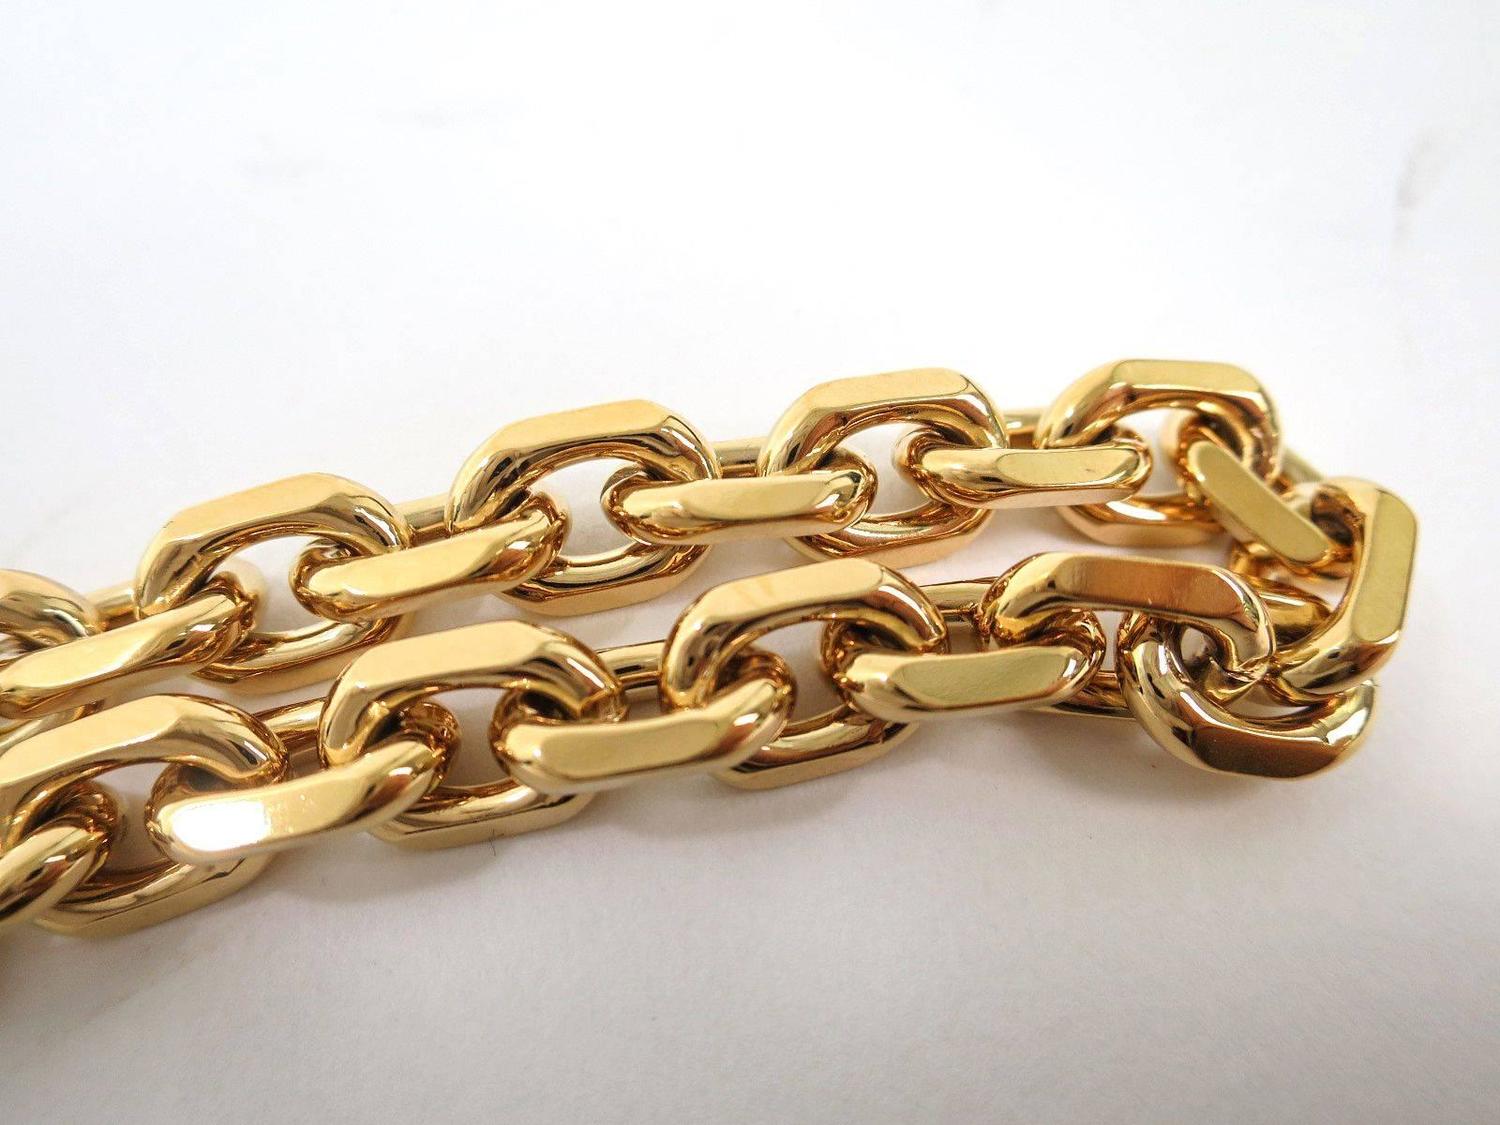 Louis Vuitton Monogram Damier Gold Pearl LV Charm Chain Link Bracelet in Box at 1stdibs